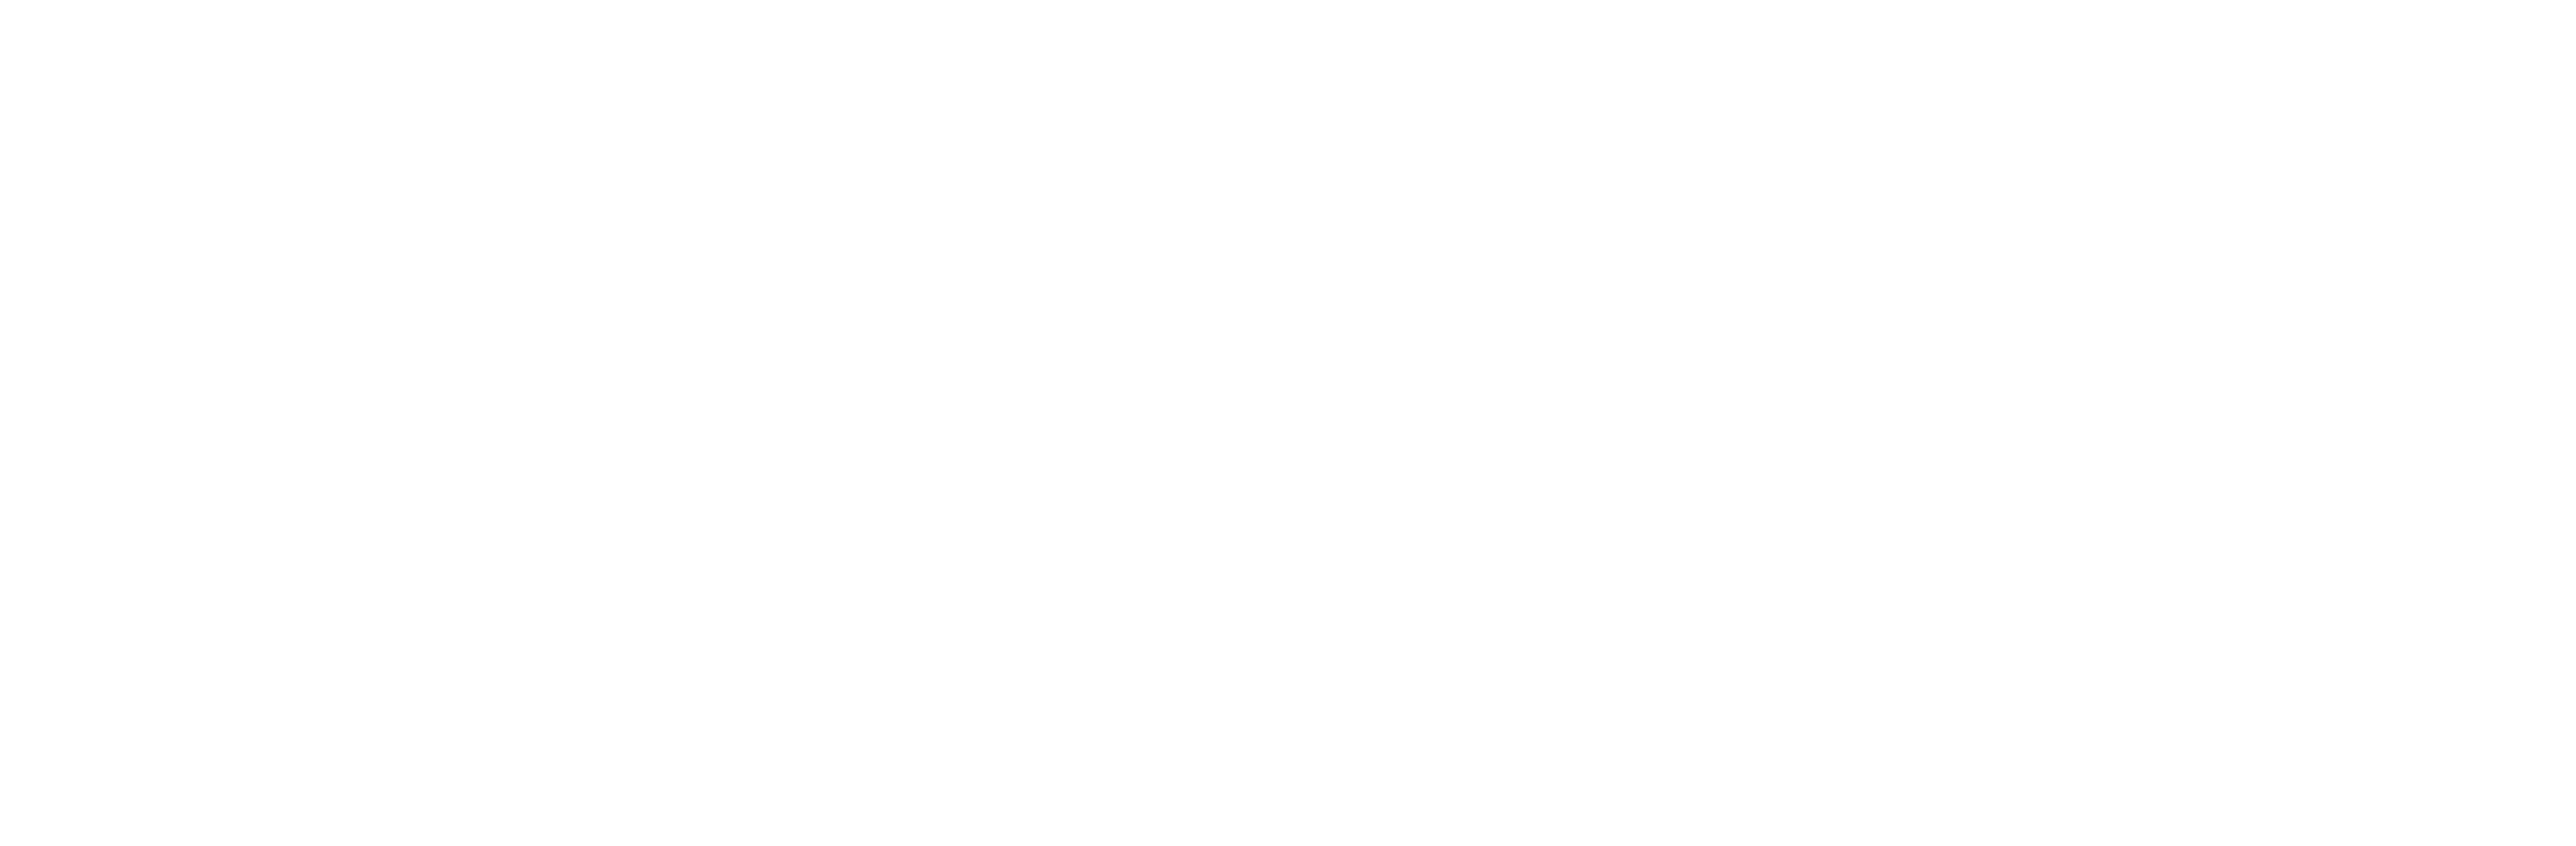 Premium Rent a Car Service in Doha Qatar - Doha Cabs Limousine Services